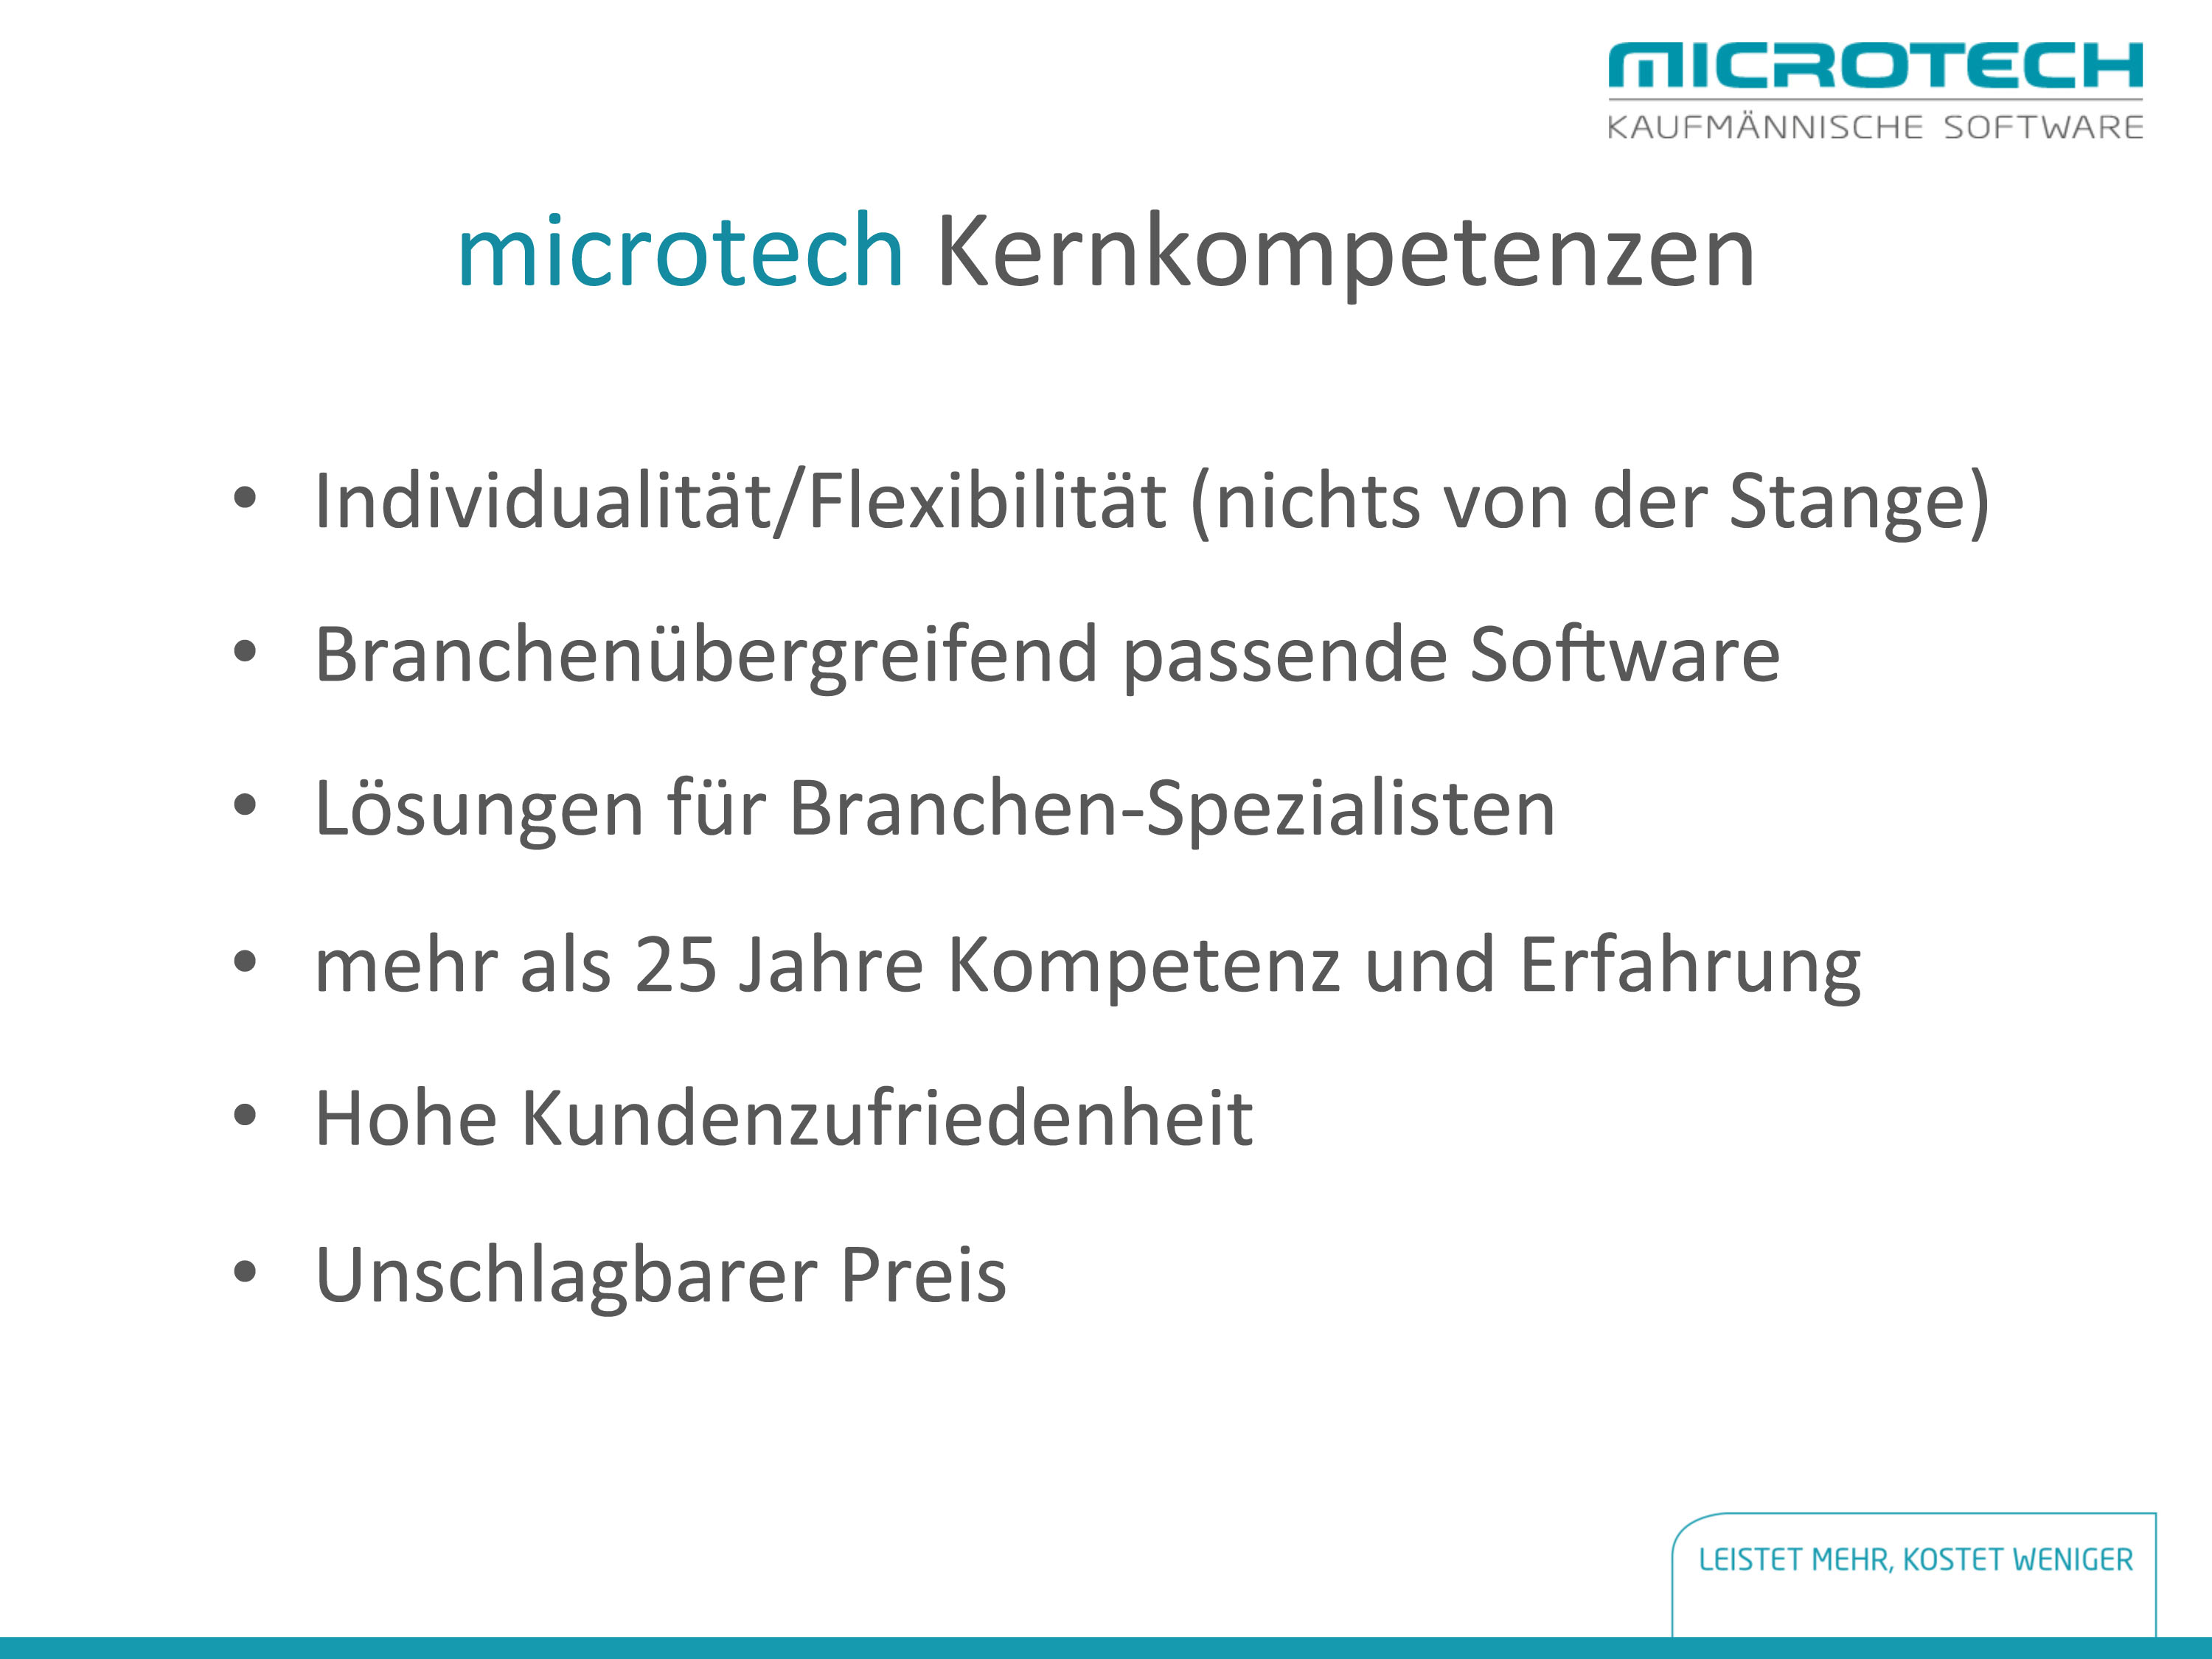 Microtech-8.jpg